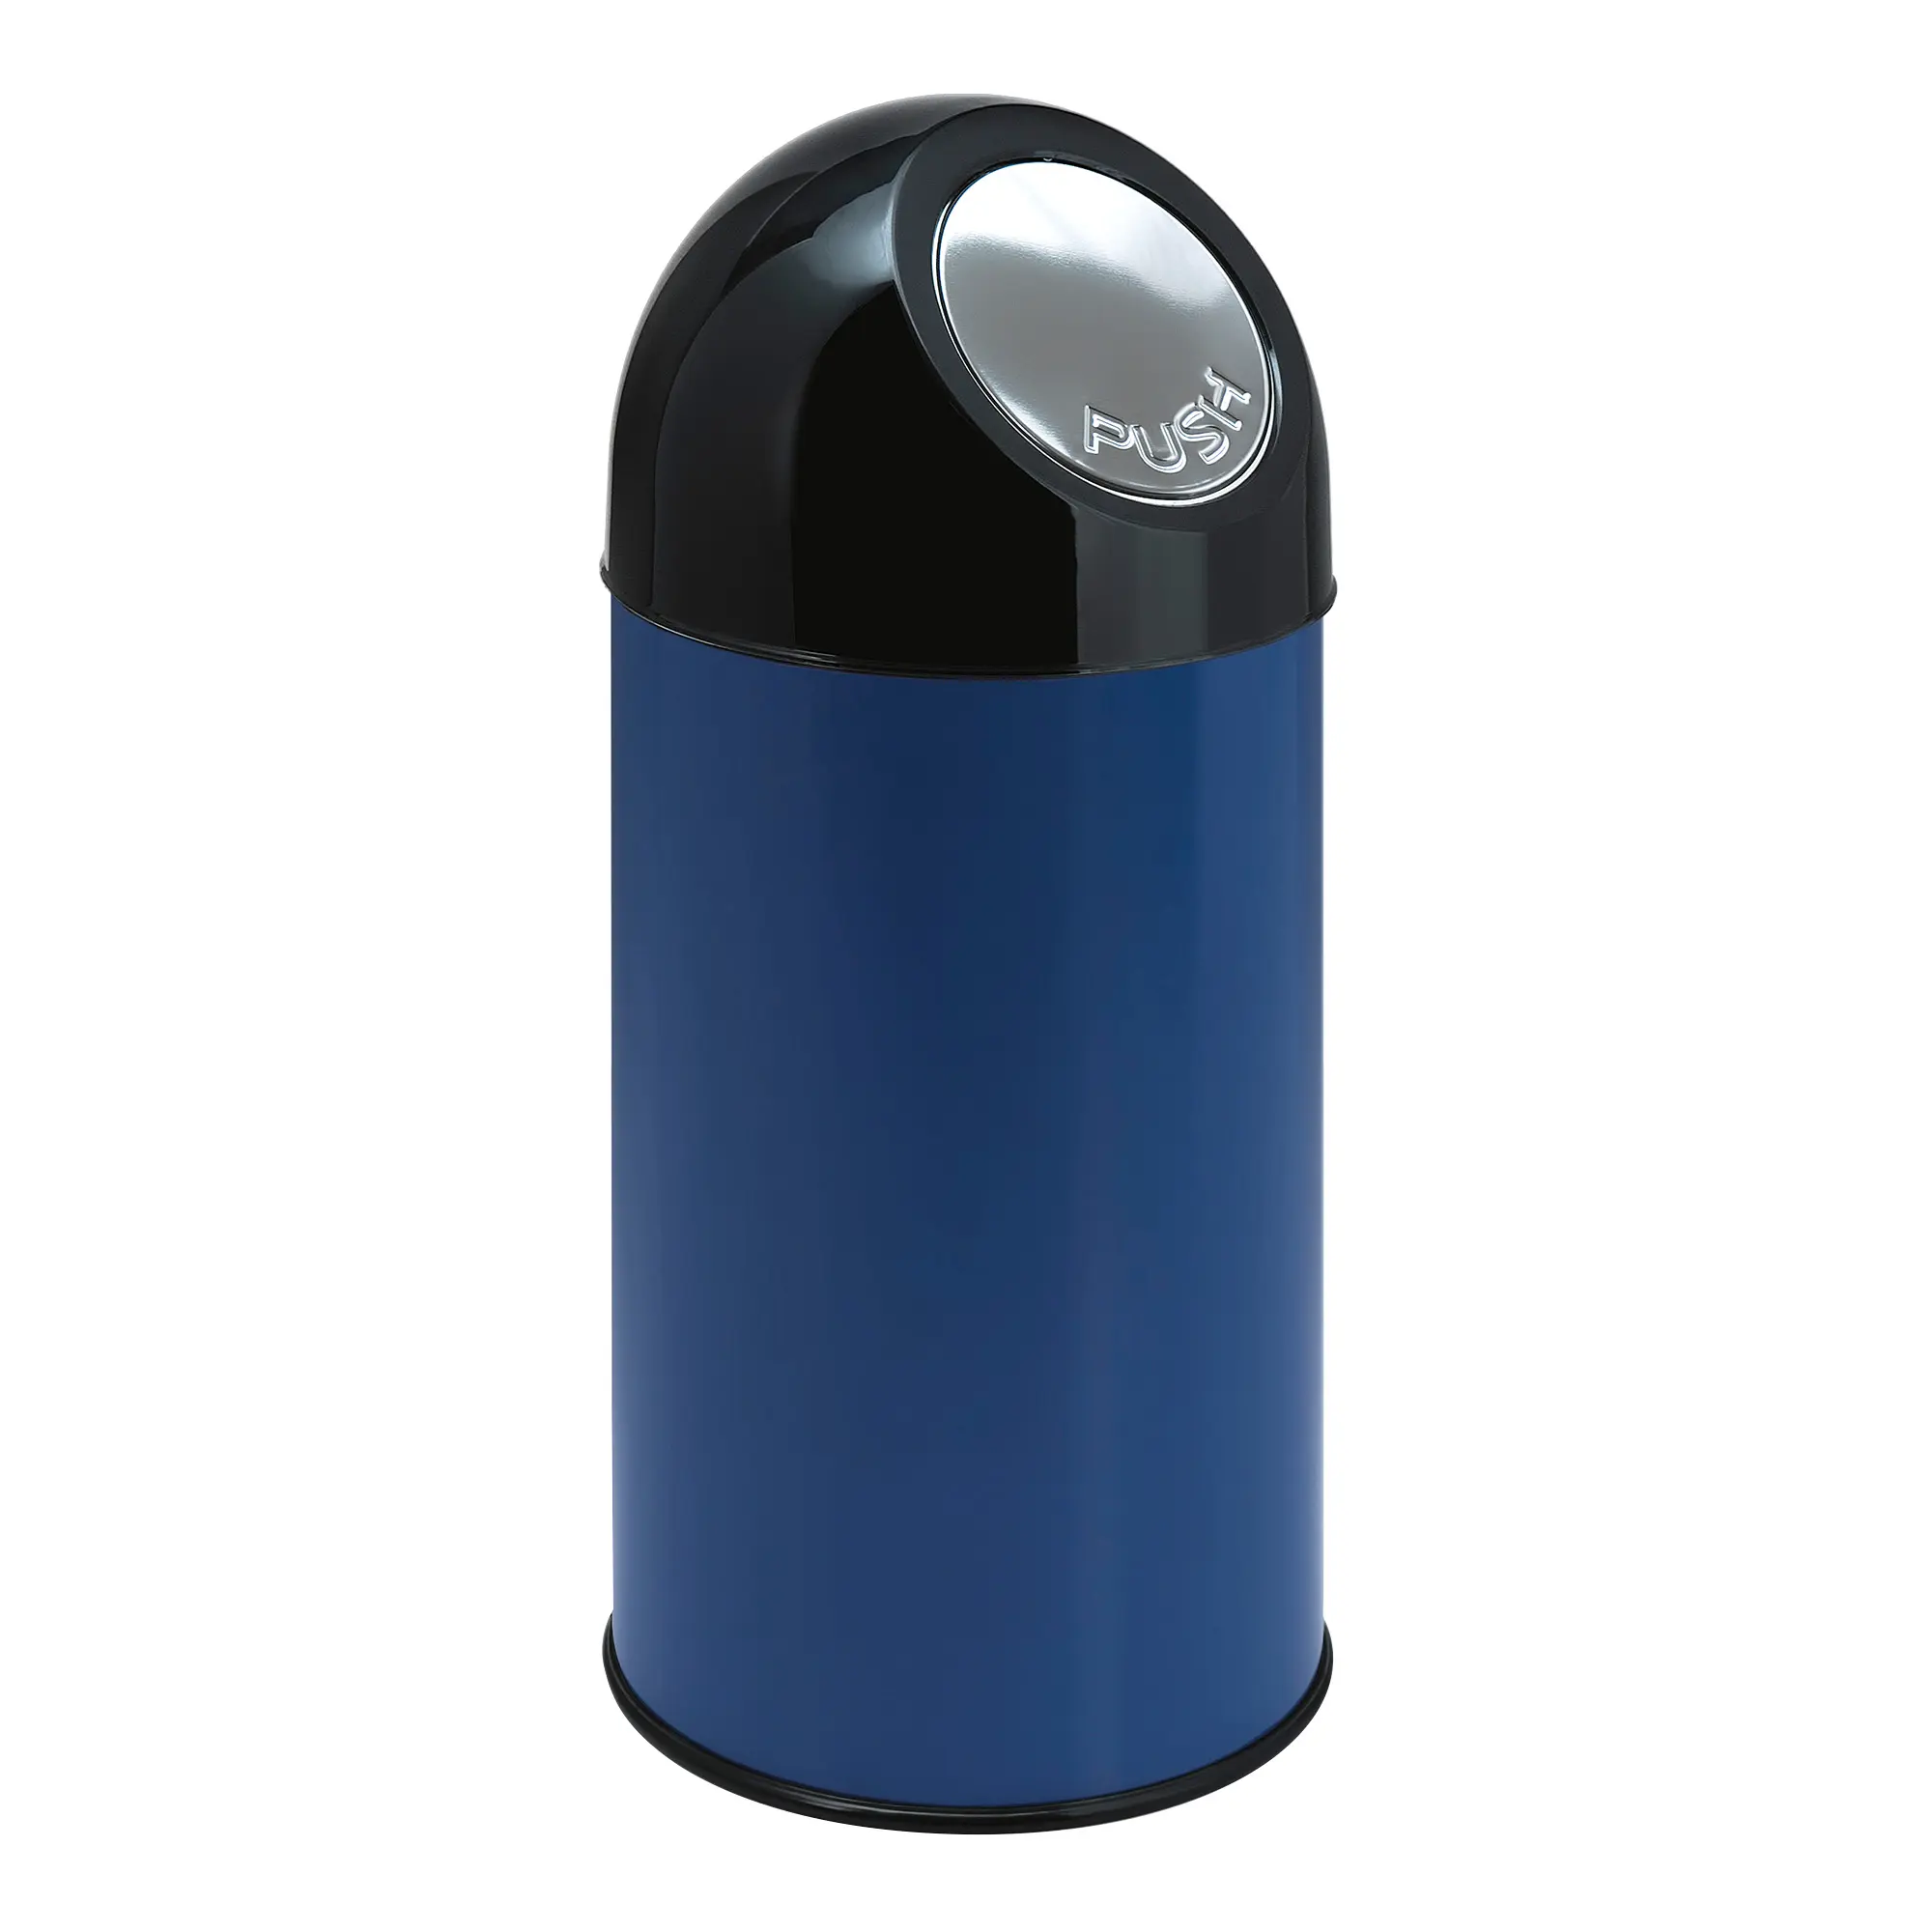 V-Part Abfallbehälter Edelstahl-Pushklappe Inneneimer 40 Liter blau/schwarz 31023394_1